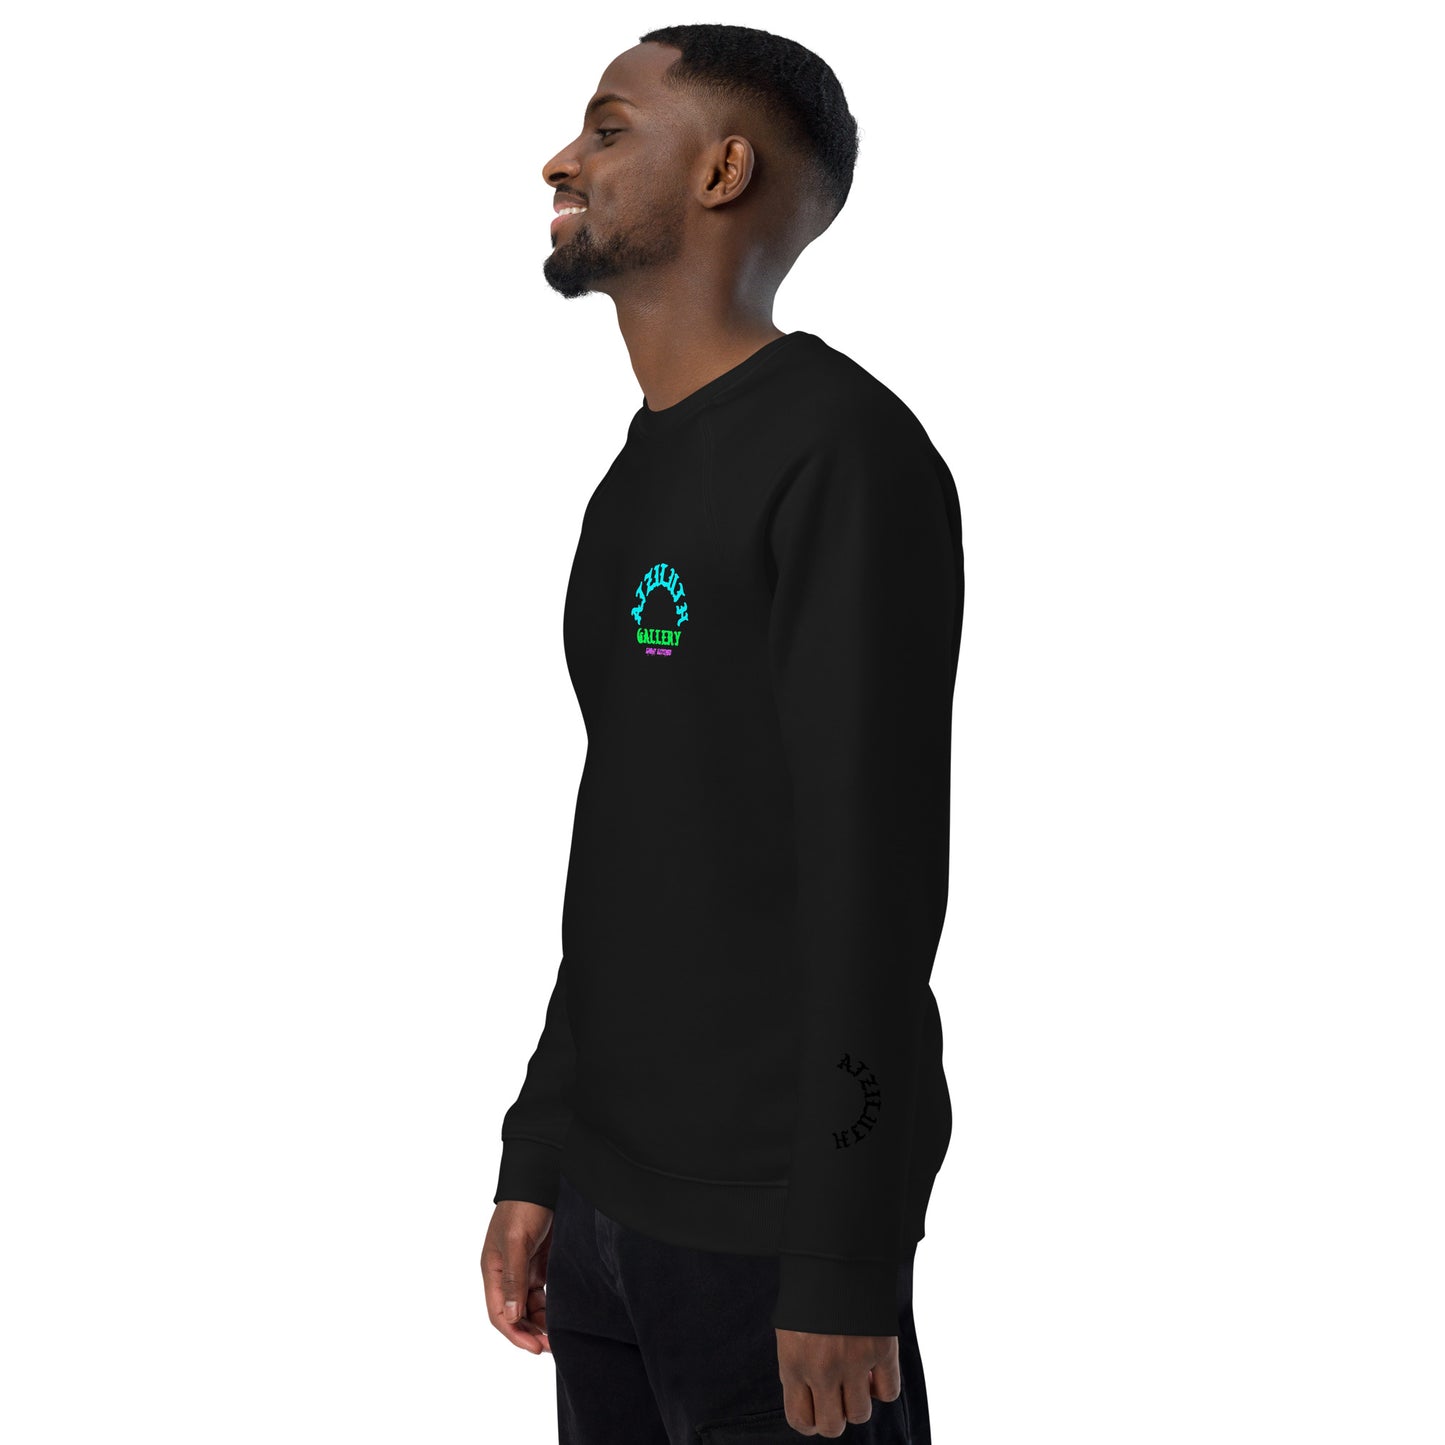 Atziluth "Ghost Glicthed" Unisex organic raglan sweatshirt